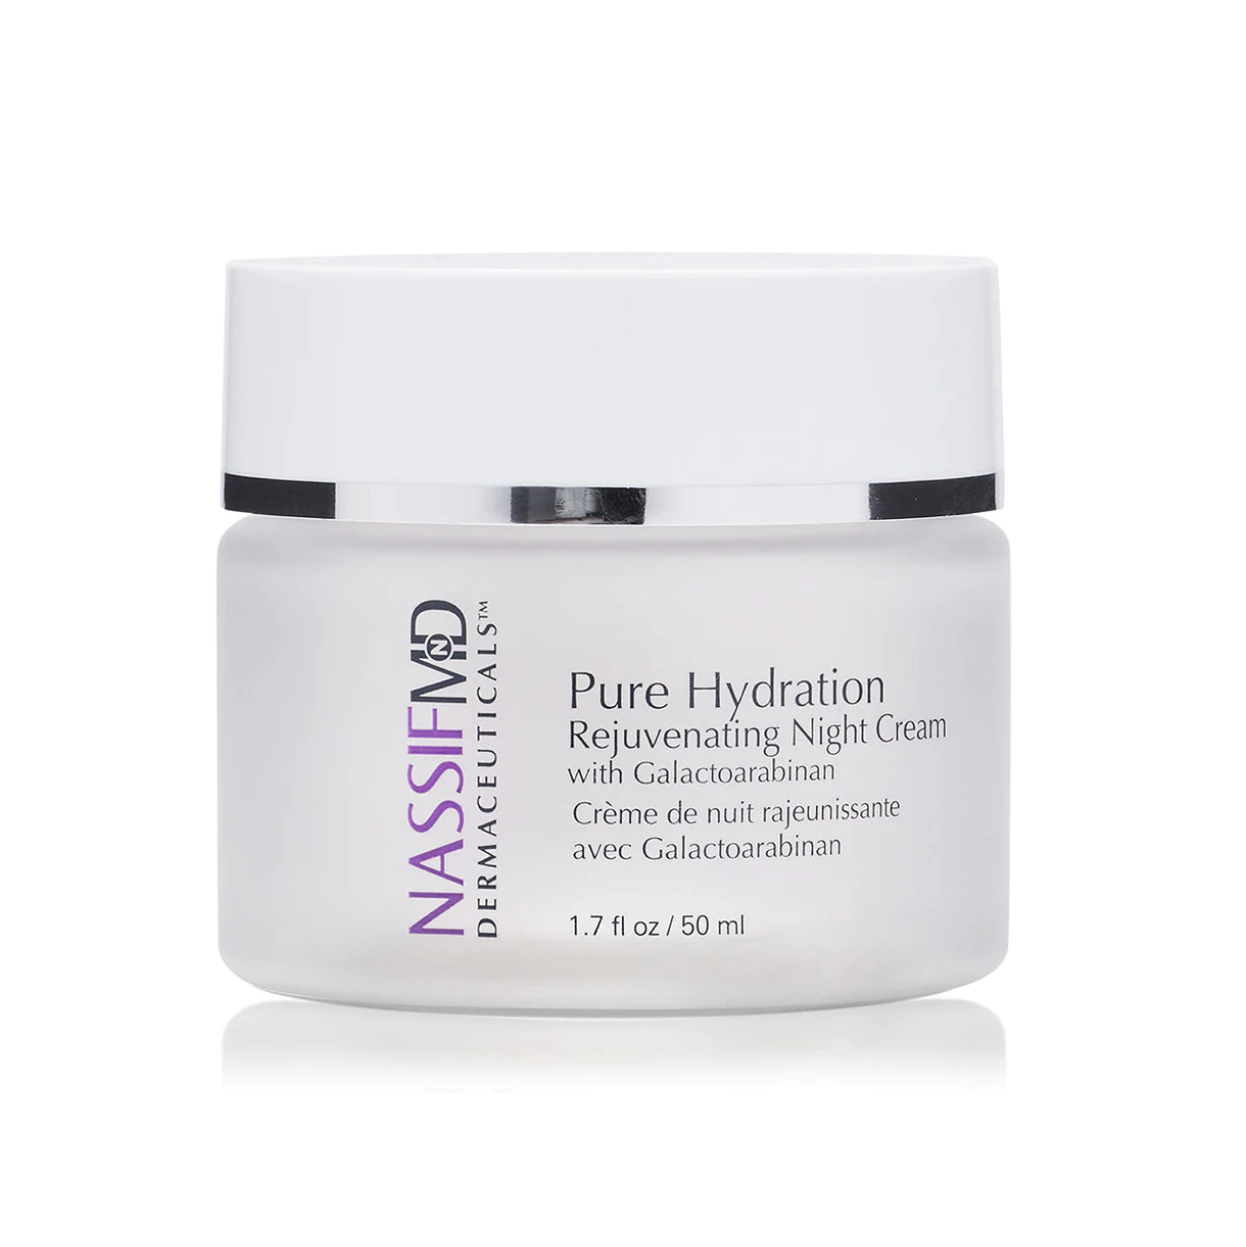 NASSIFMD - Pure Hydration Rejuvenating Night Cream